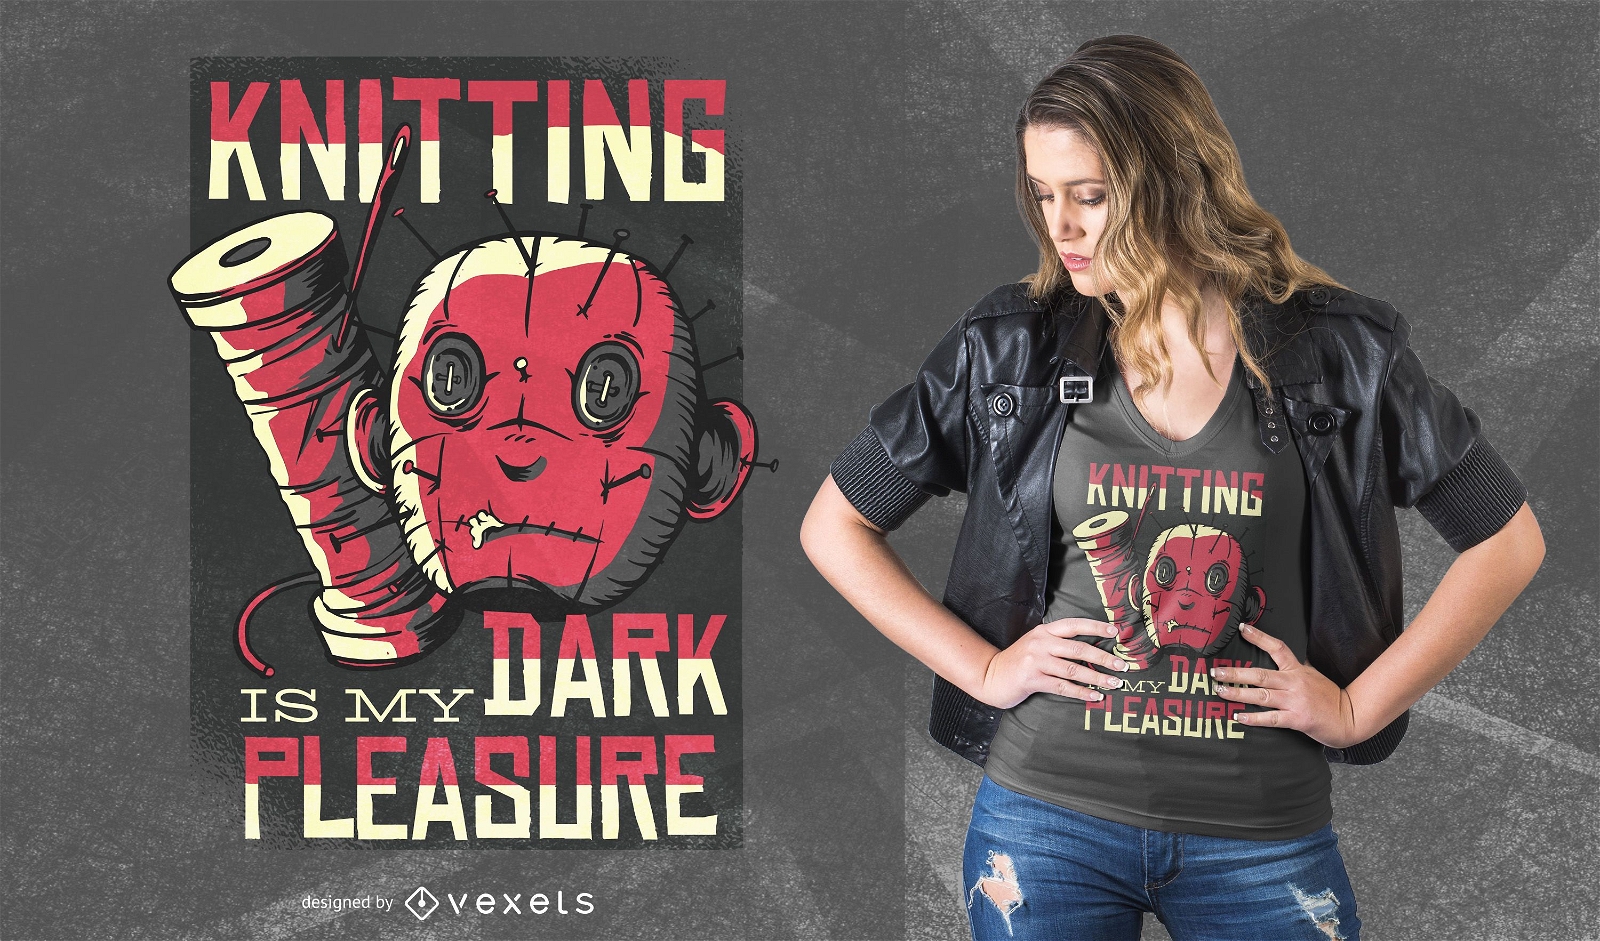 Knitting dark pleasure t-shirt design